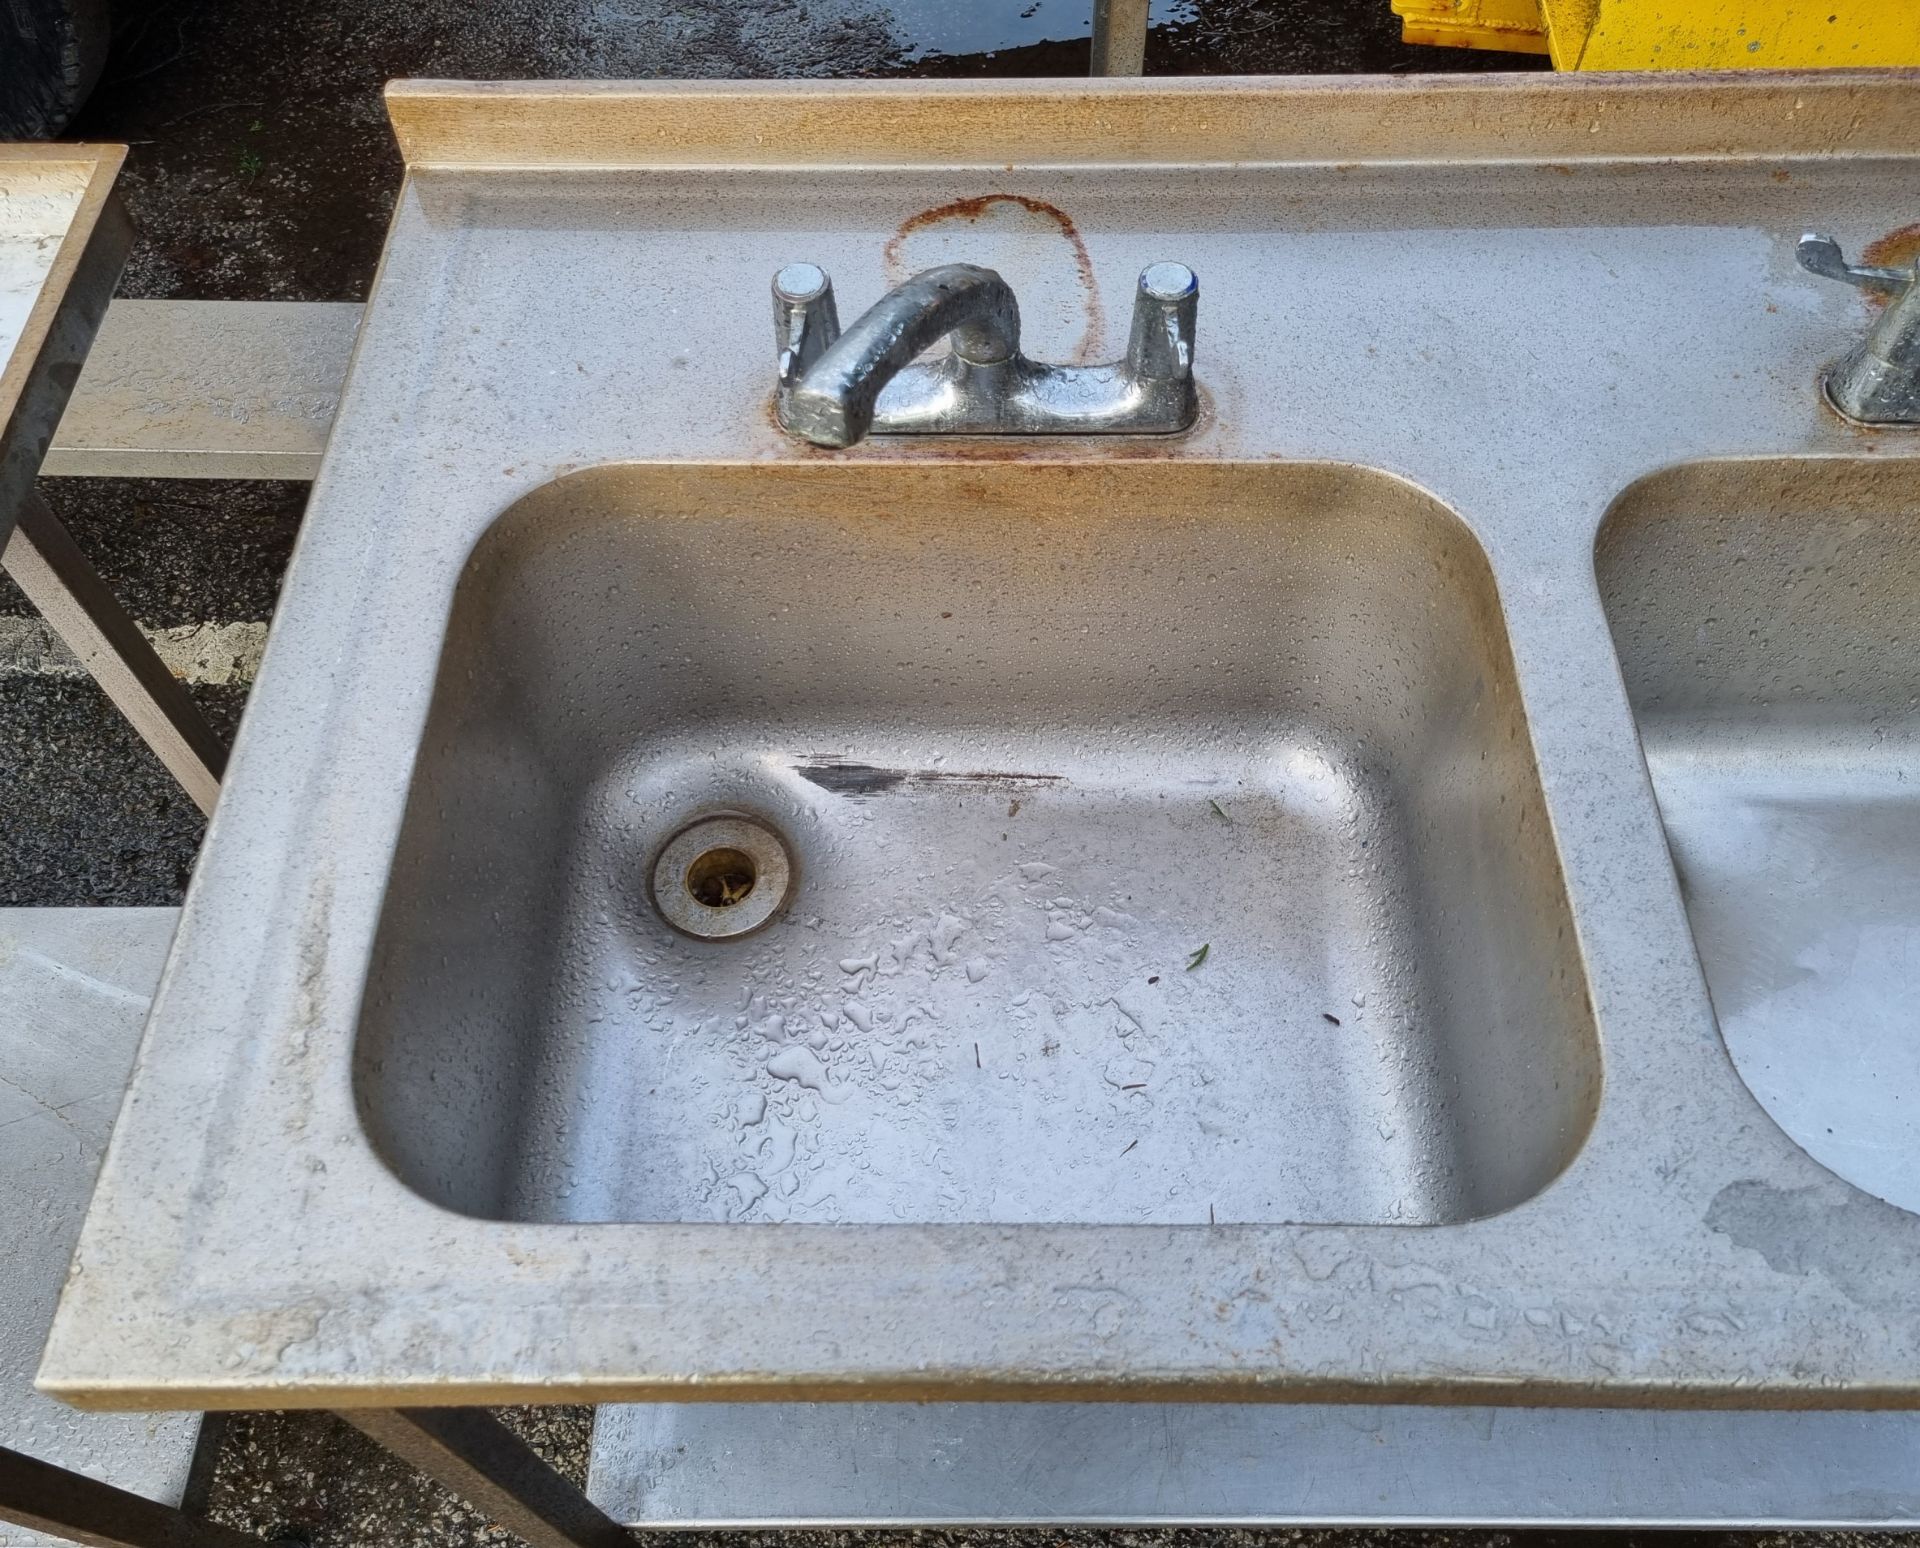 Stainless steel sink unit with dual sinks - L 1400 x W 700 x H 1050mm - Bild 4 aus 5